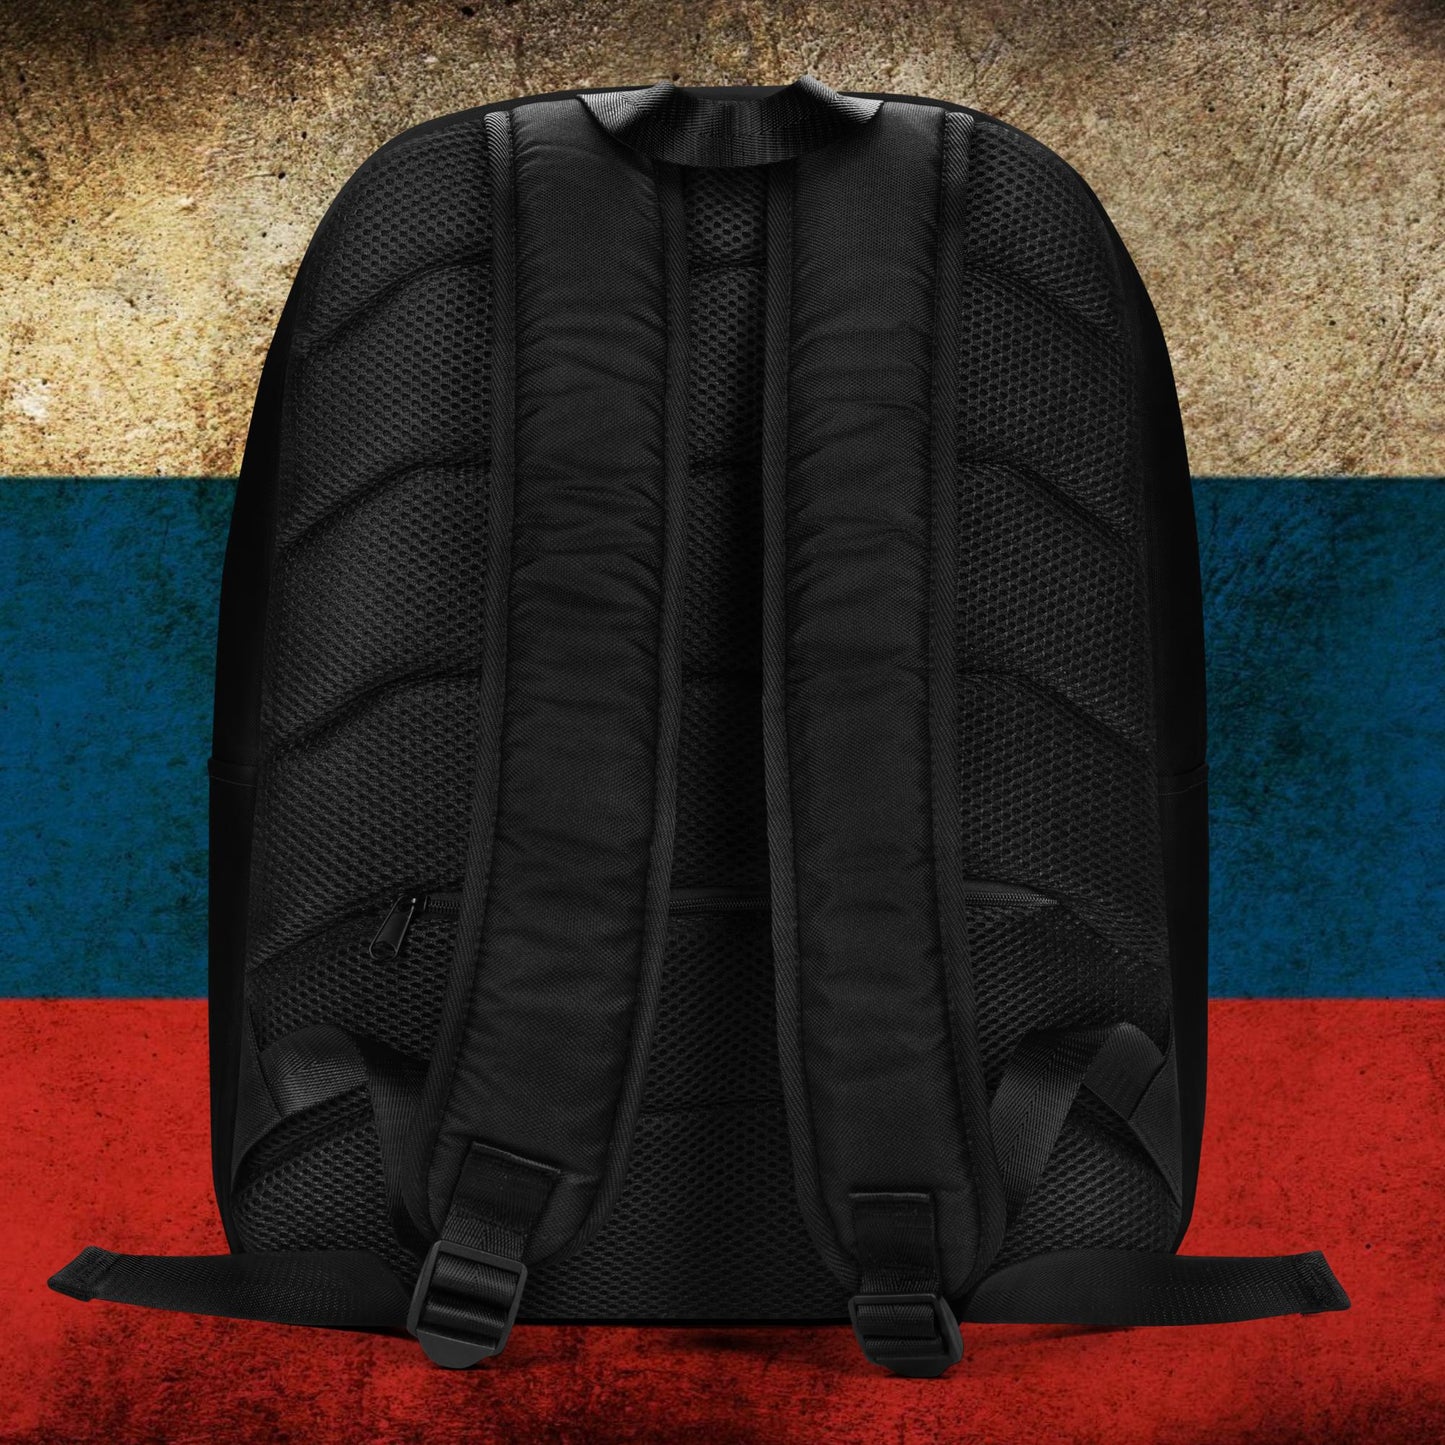 Pootin Funny Anti Vladimir Putin Backpack Next Cult Brand